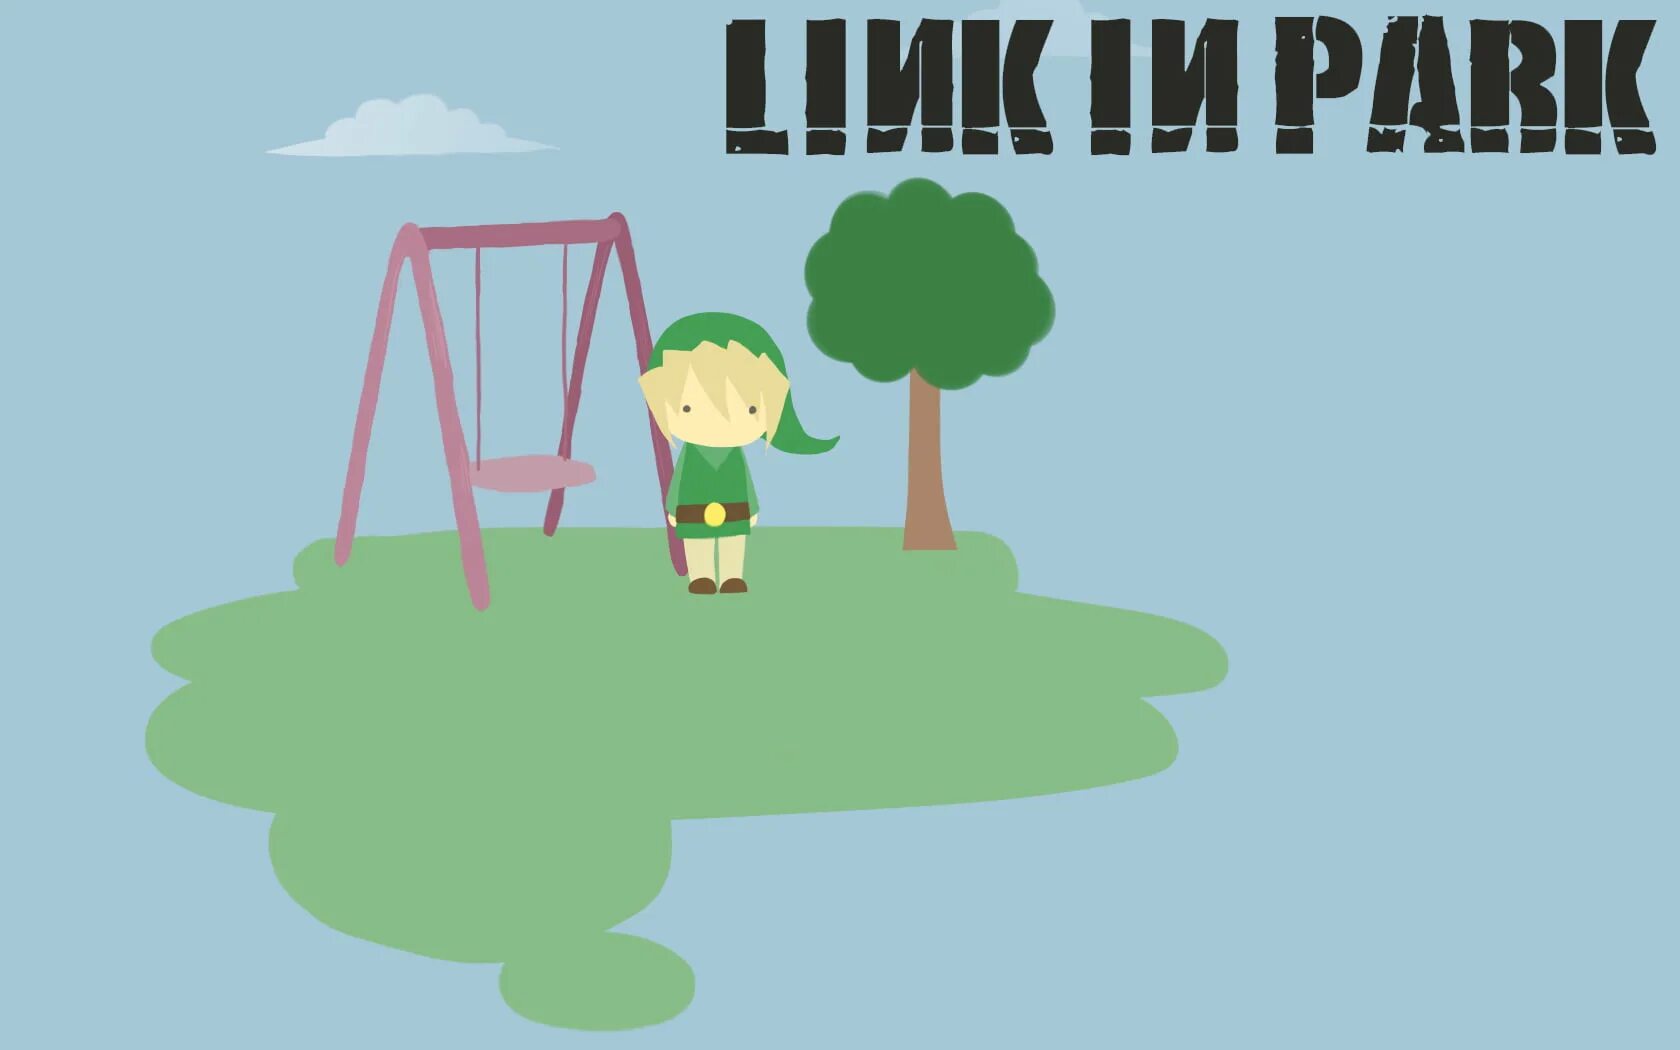 He saw in the park. Link in Park. Линк парк бред. Linkin Park cartoon Wallpaper. Картинки с логотипом линка парка.